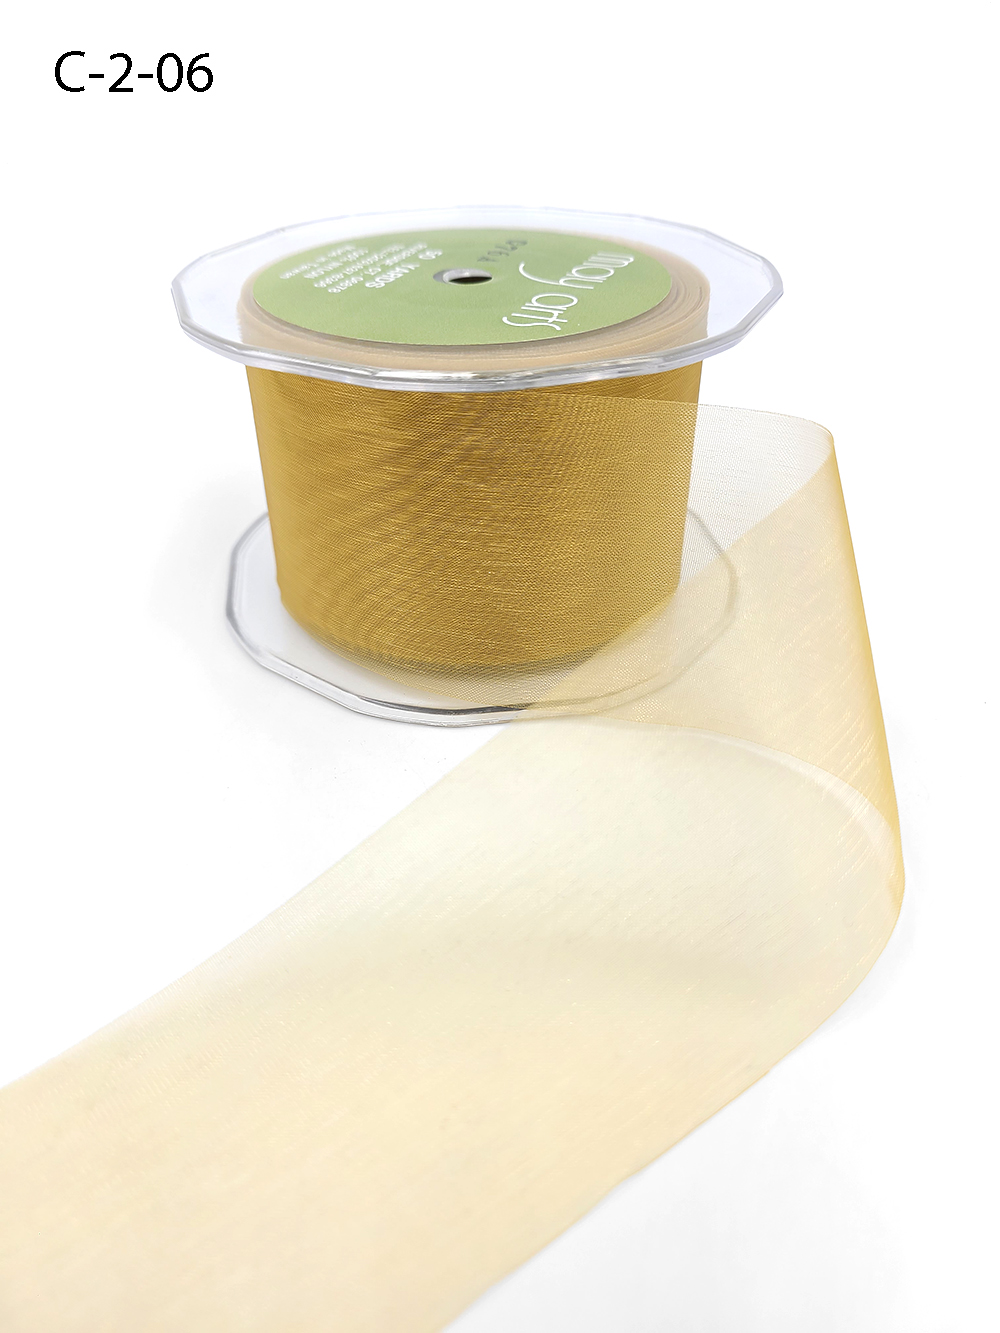  Wanvislin White Shimmer Sheer Organza Ribbon 4/5 inch